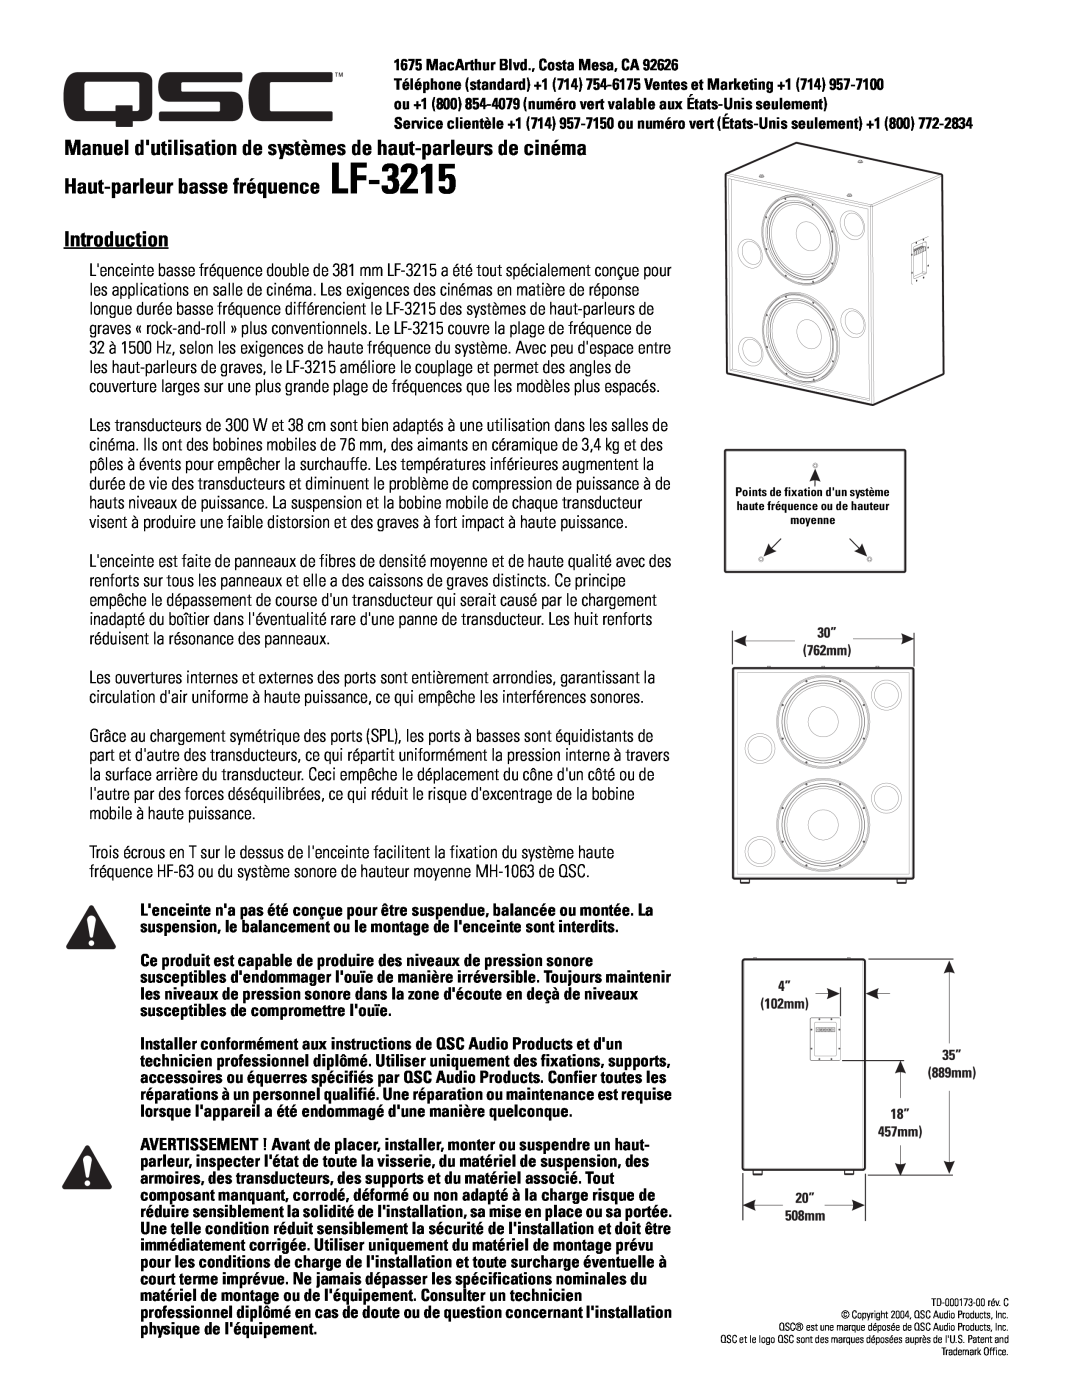 QSC Audio SC-322 specifications Introduction, MacArthur Blvd., Costa Mesa, CA 